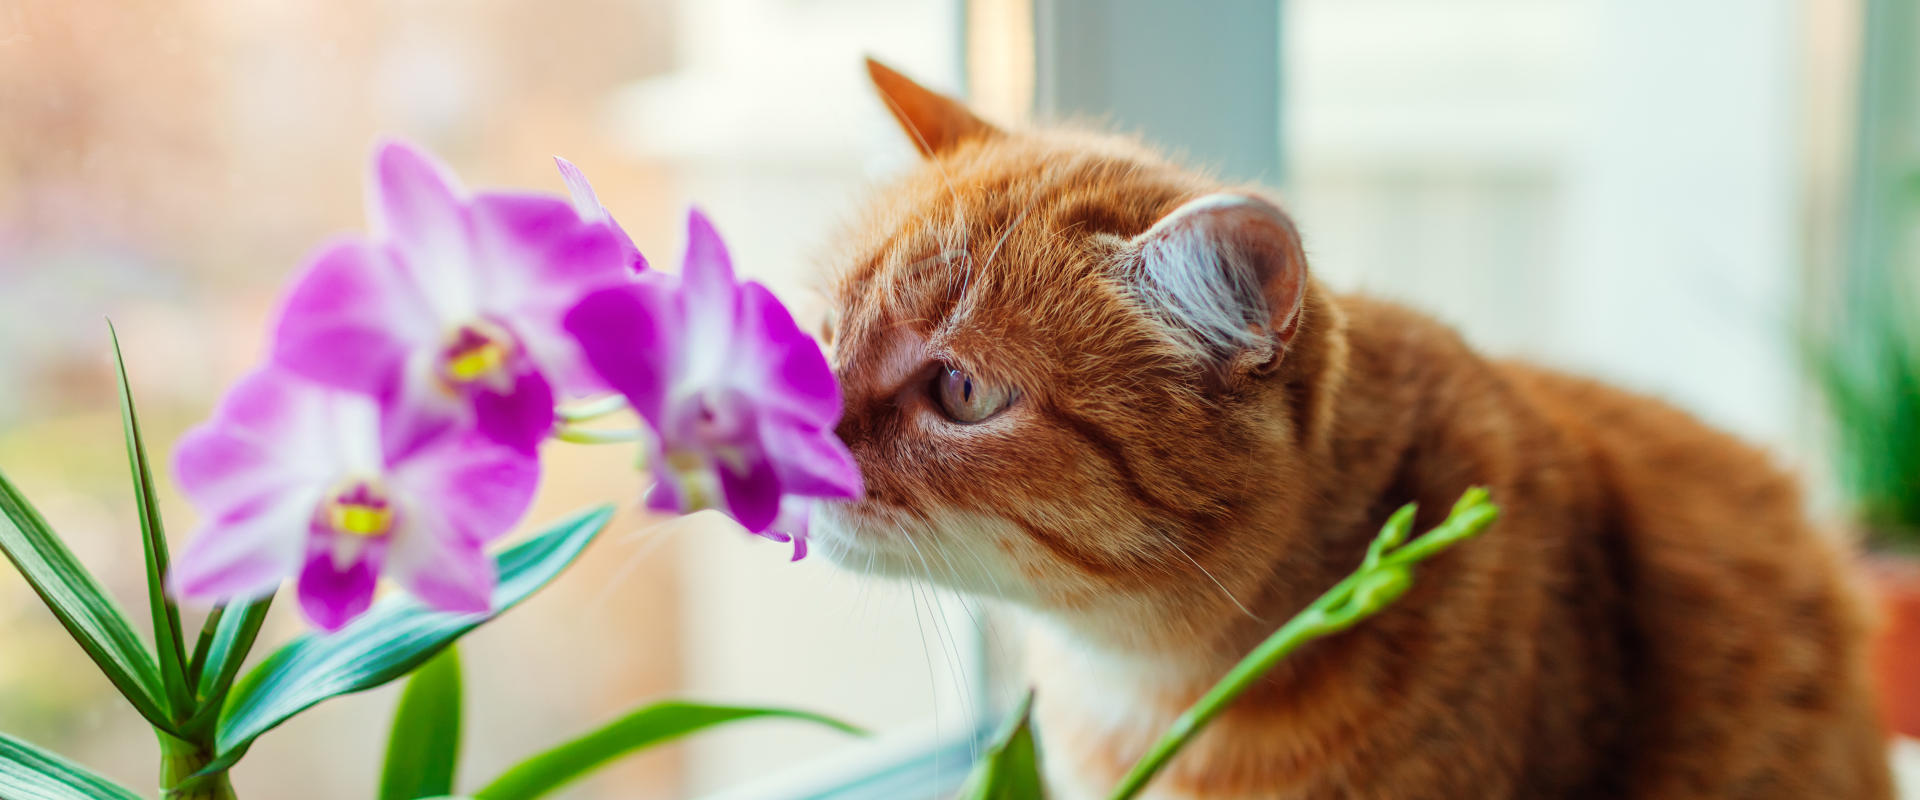 A cat sniffs some cat-safe flowers.